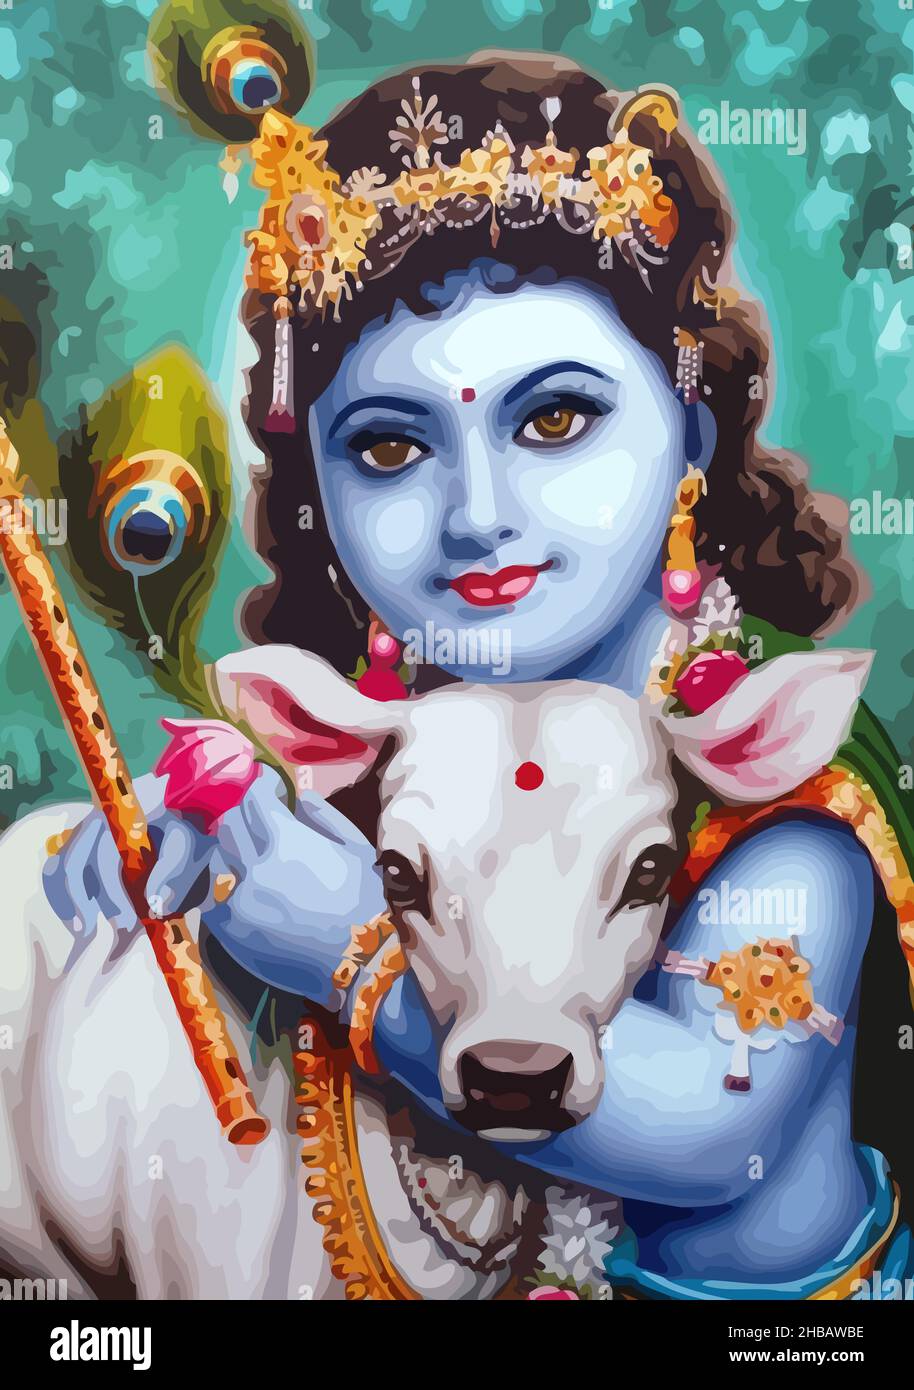 shri krishna govinda hinduism culture mythology illustration Stock ...